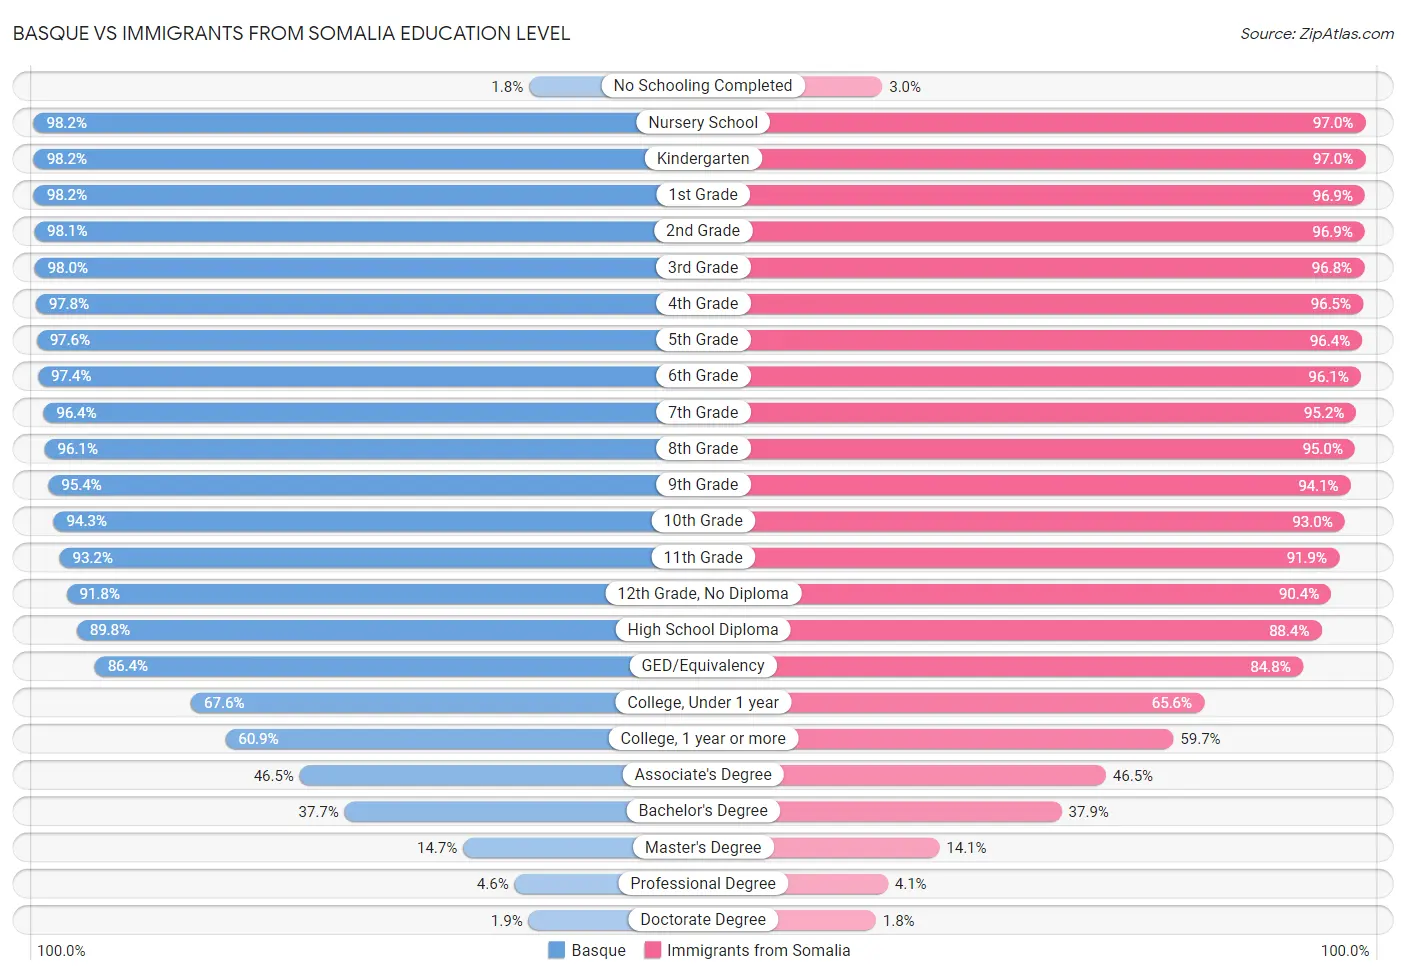 Basque vs Immigrants from Somalia Education Level